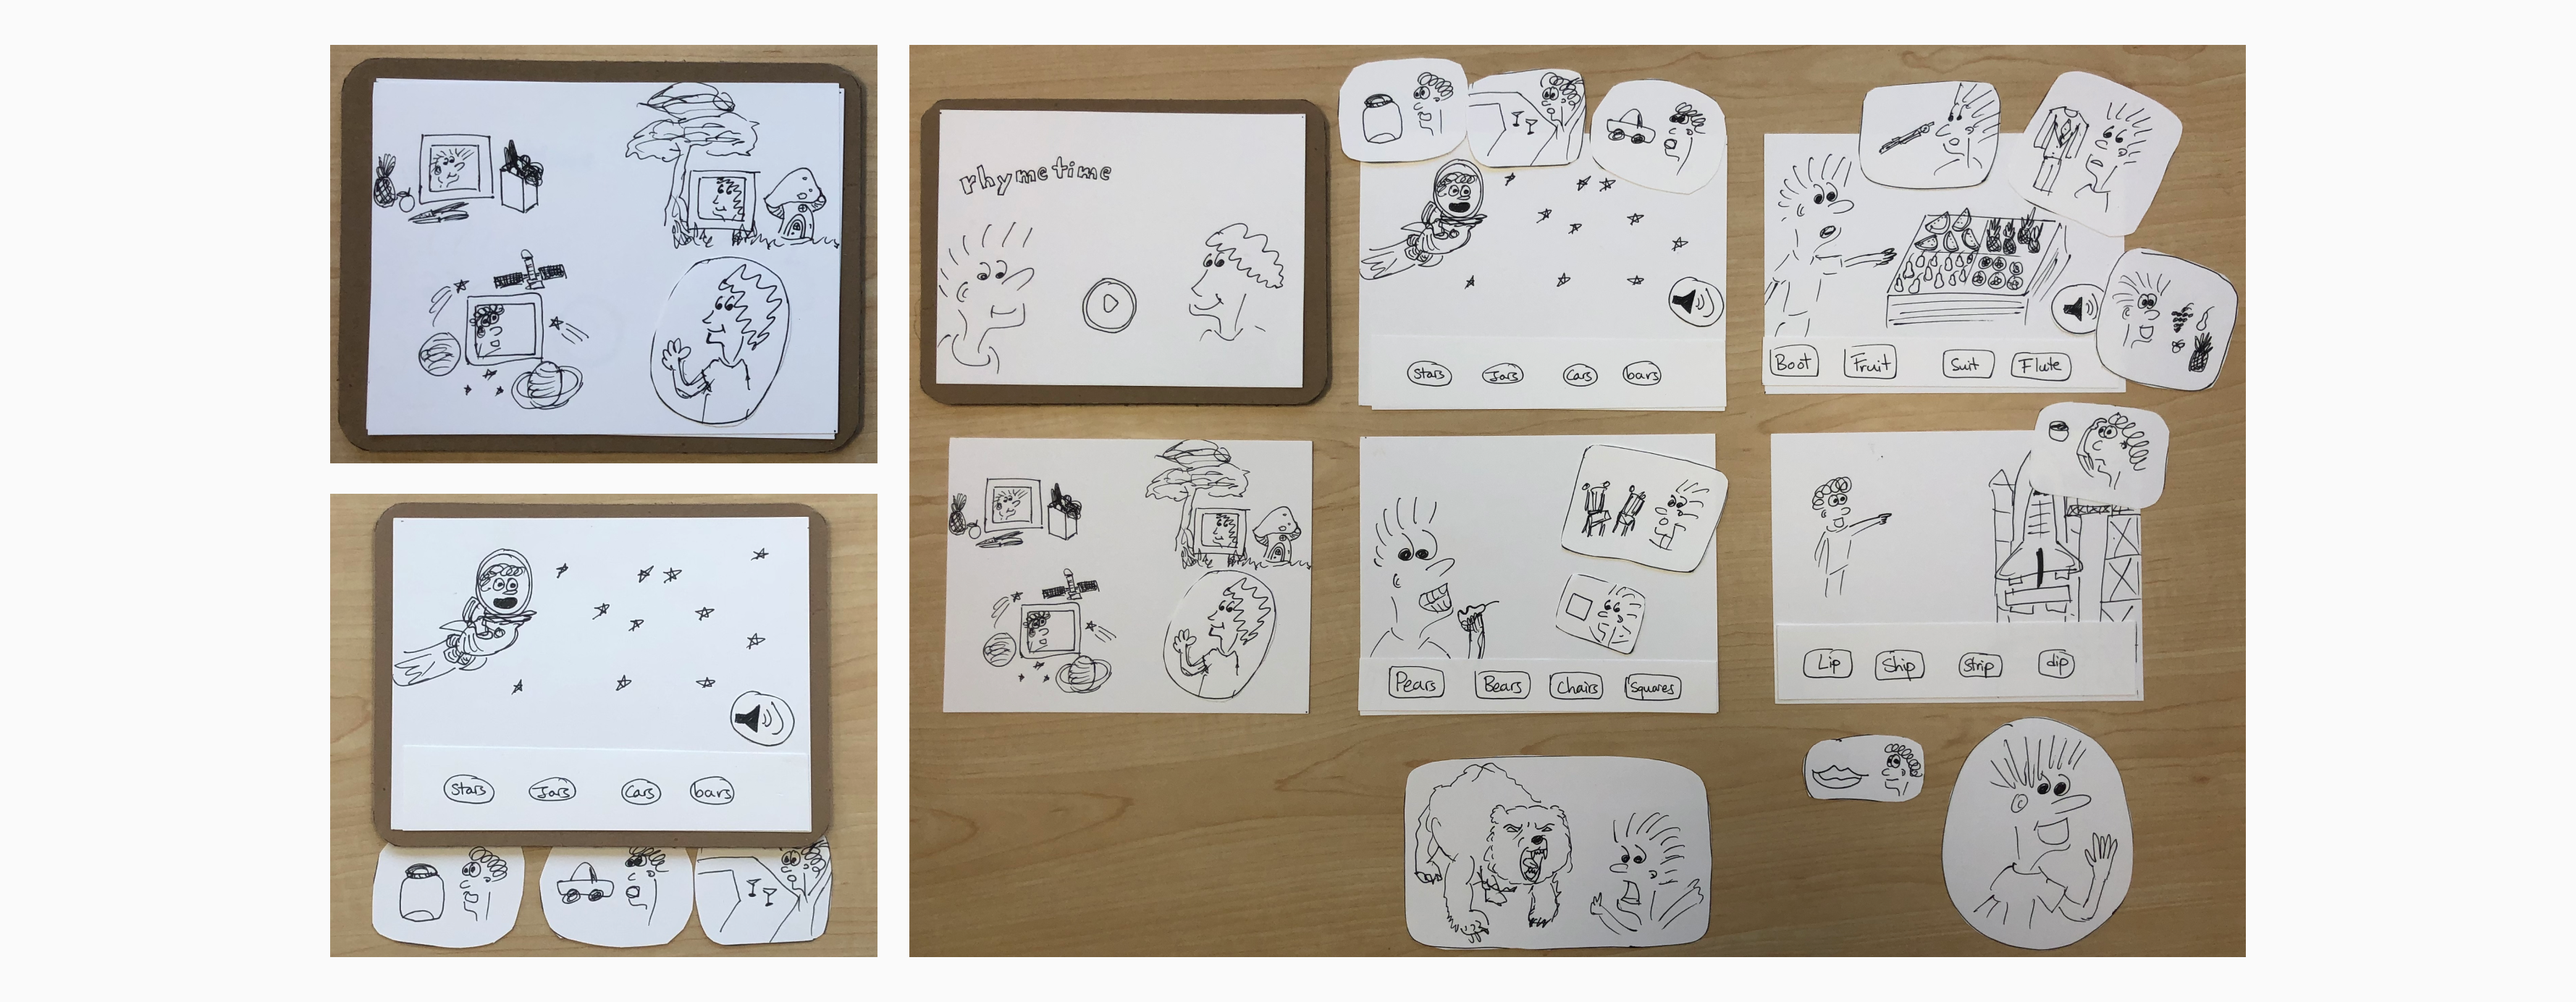 Image of paper prototypes of iPad app idea..